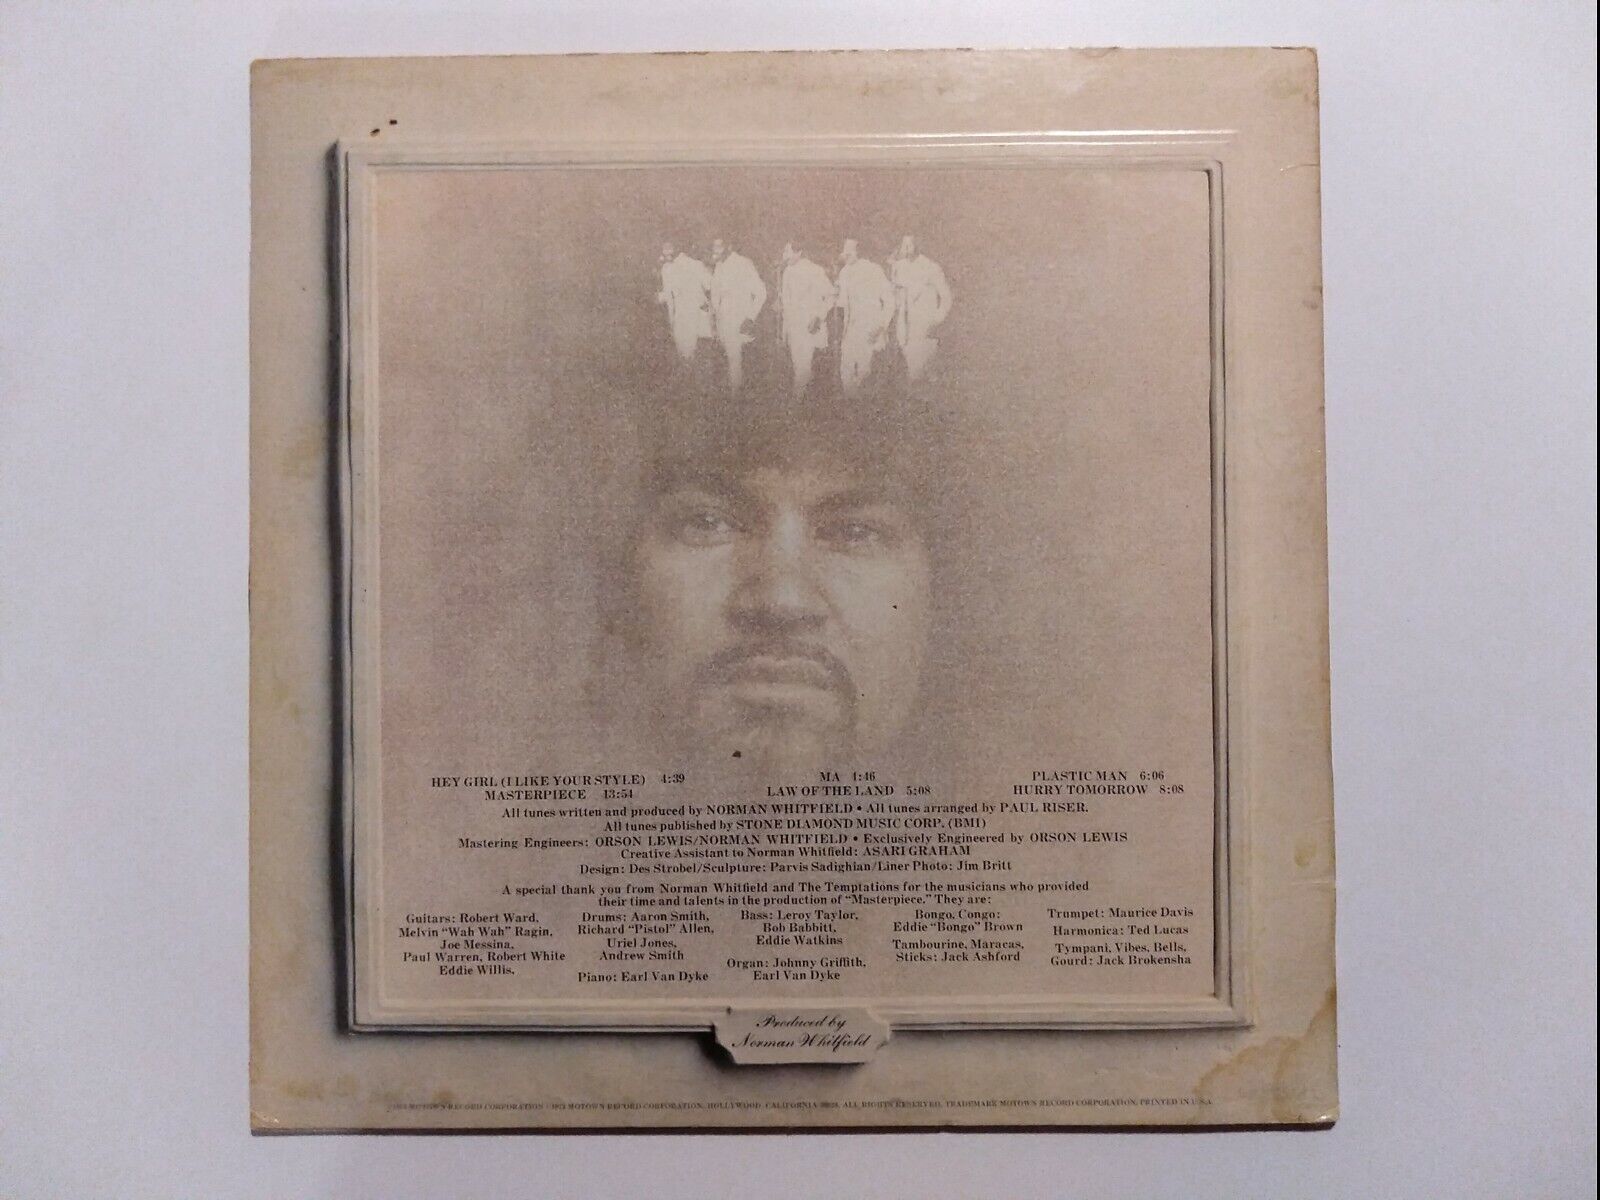 1973 The Temptations "Masterpiece" Gordy/Motown G965L Stereo LP Vinyl Record 